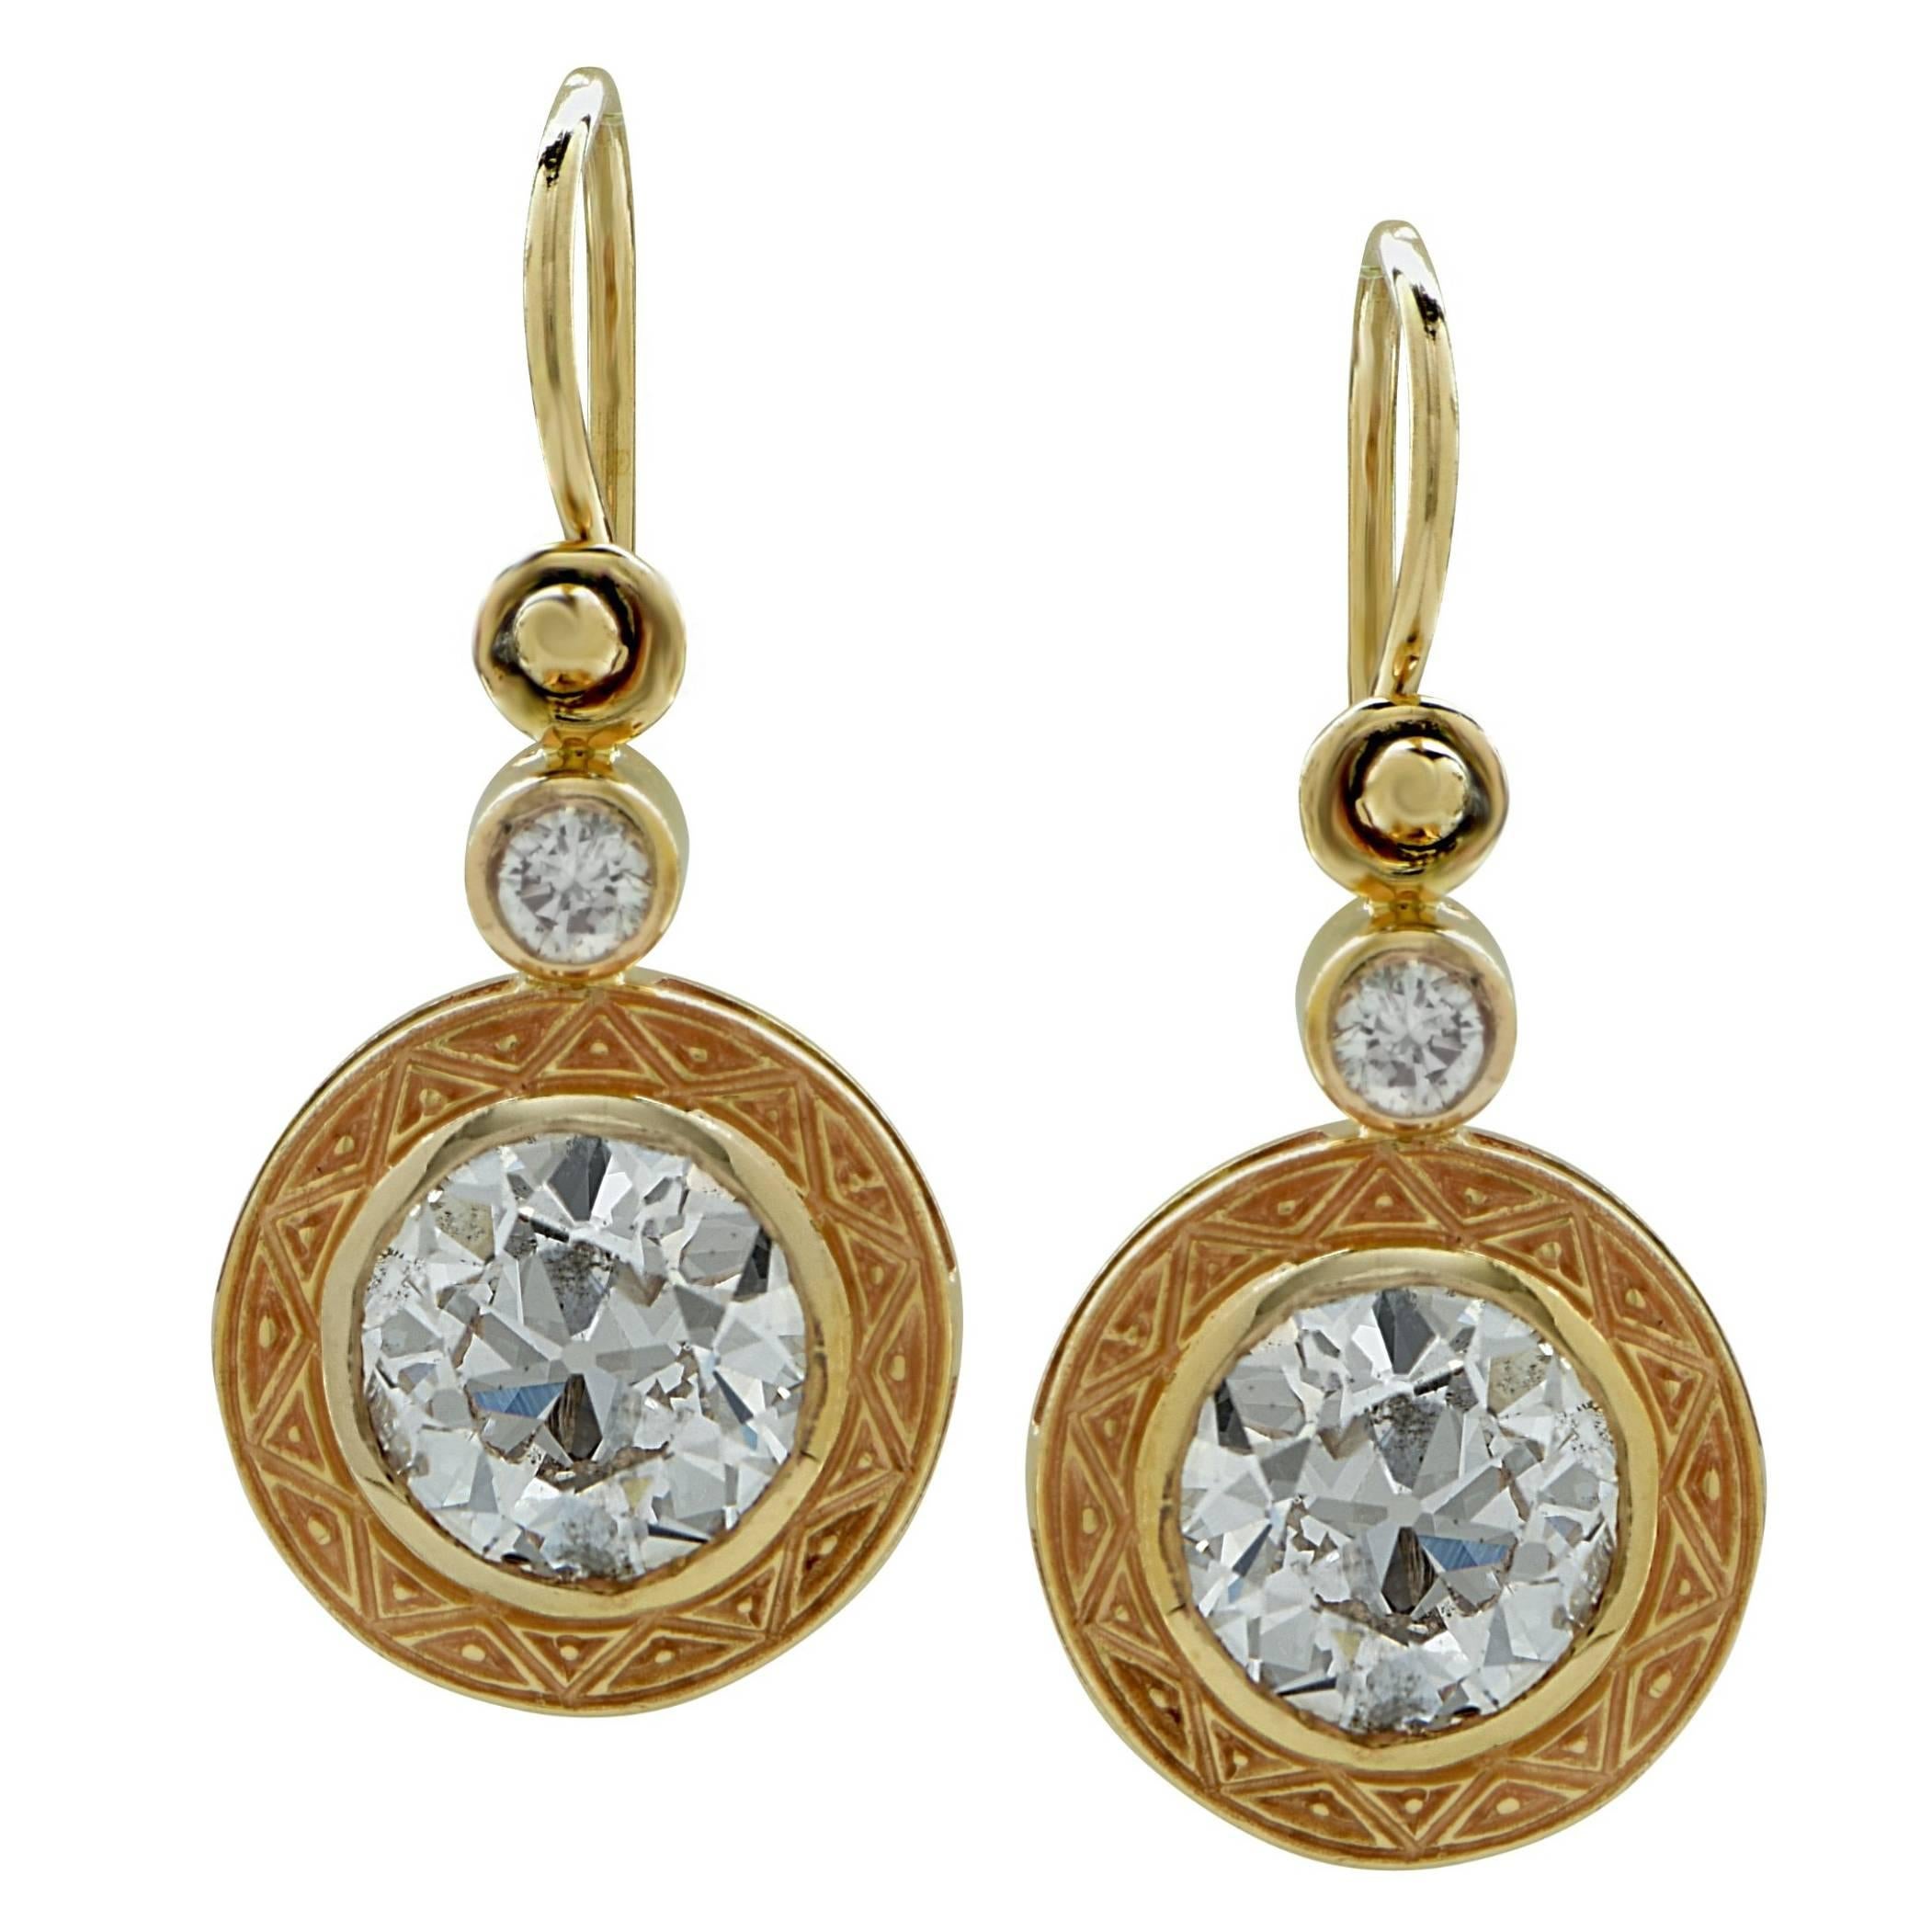 3 Carat European Cut Diamond Gold Earrings